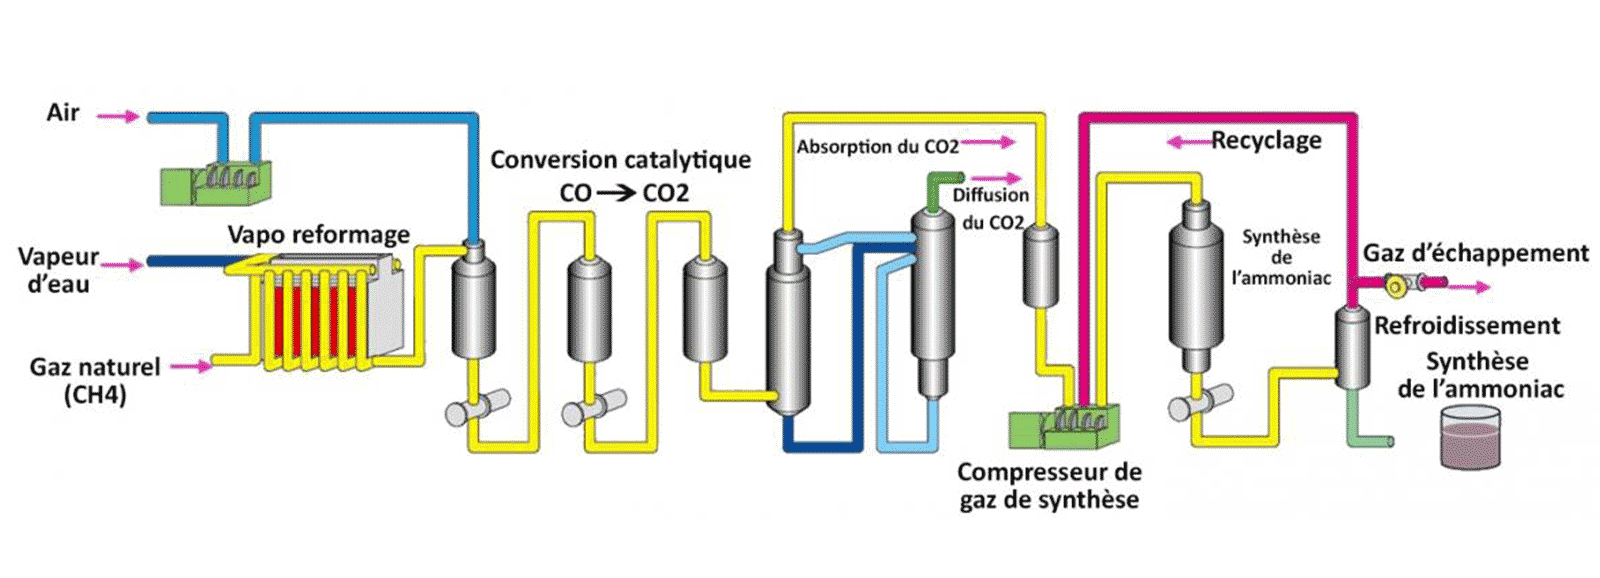 Synthèse de l'ammoniac - procédé Haber-Bosch